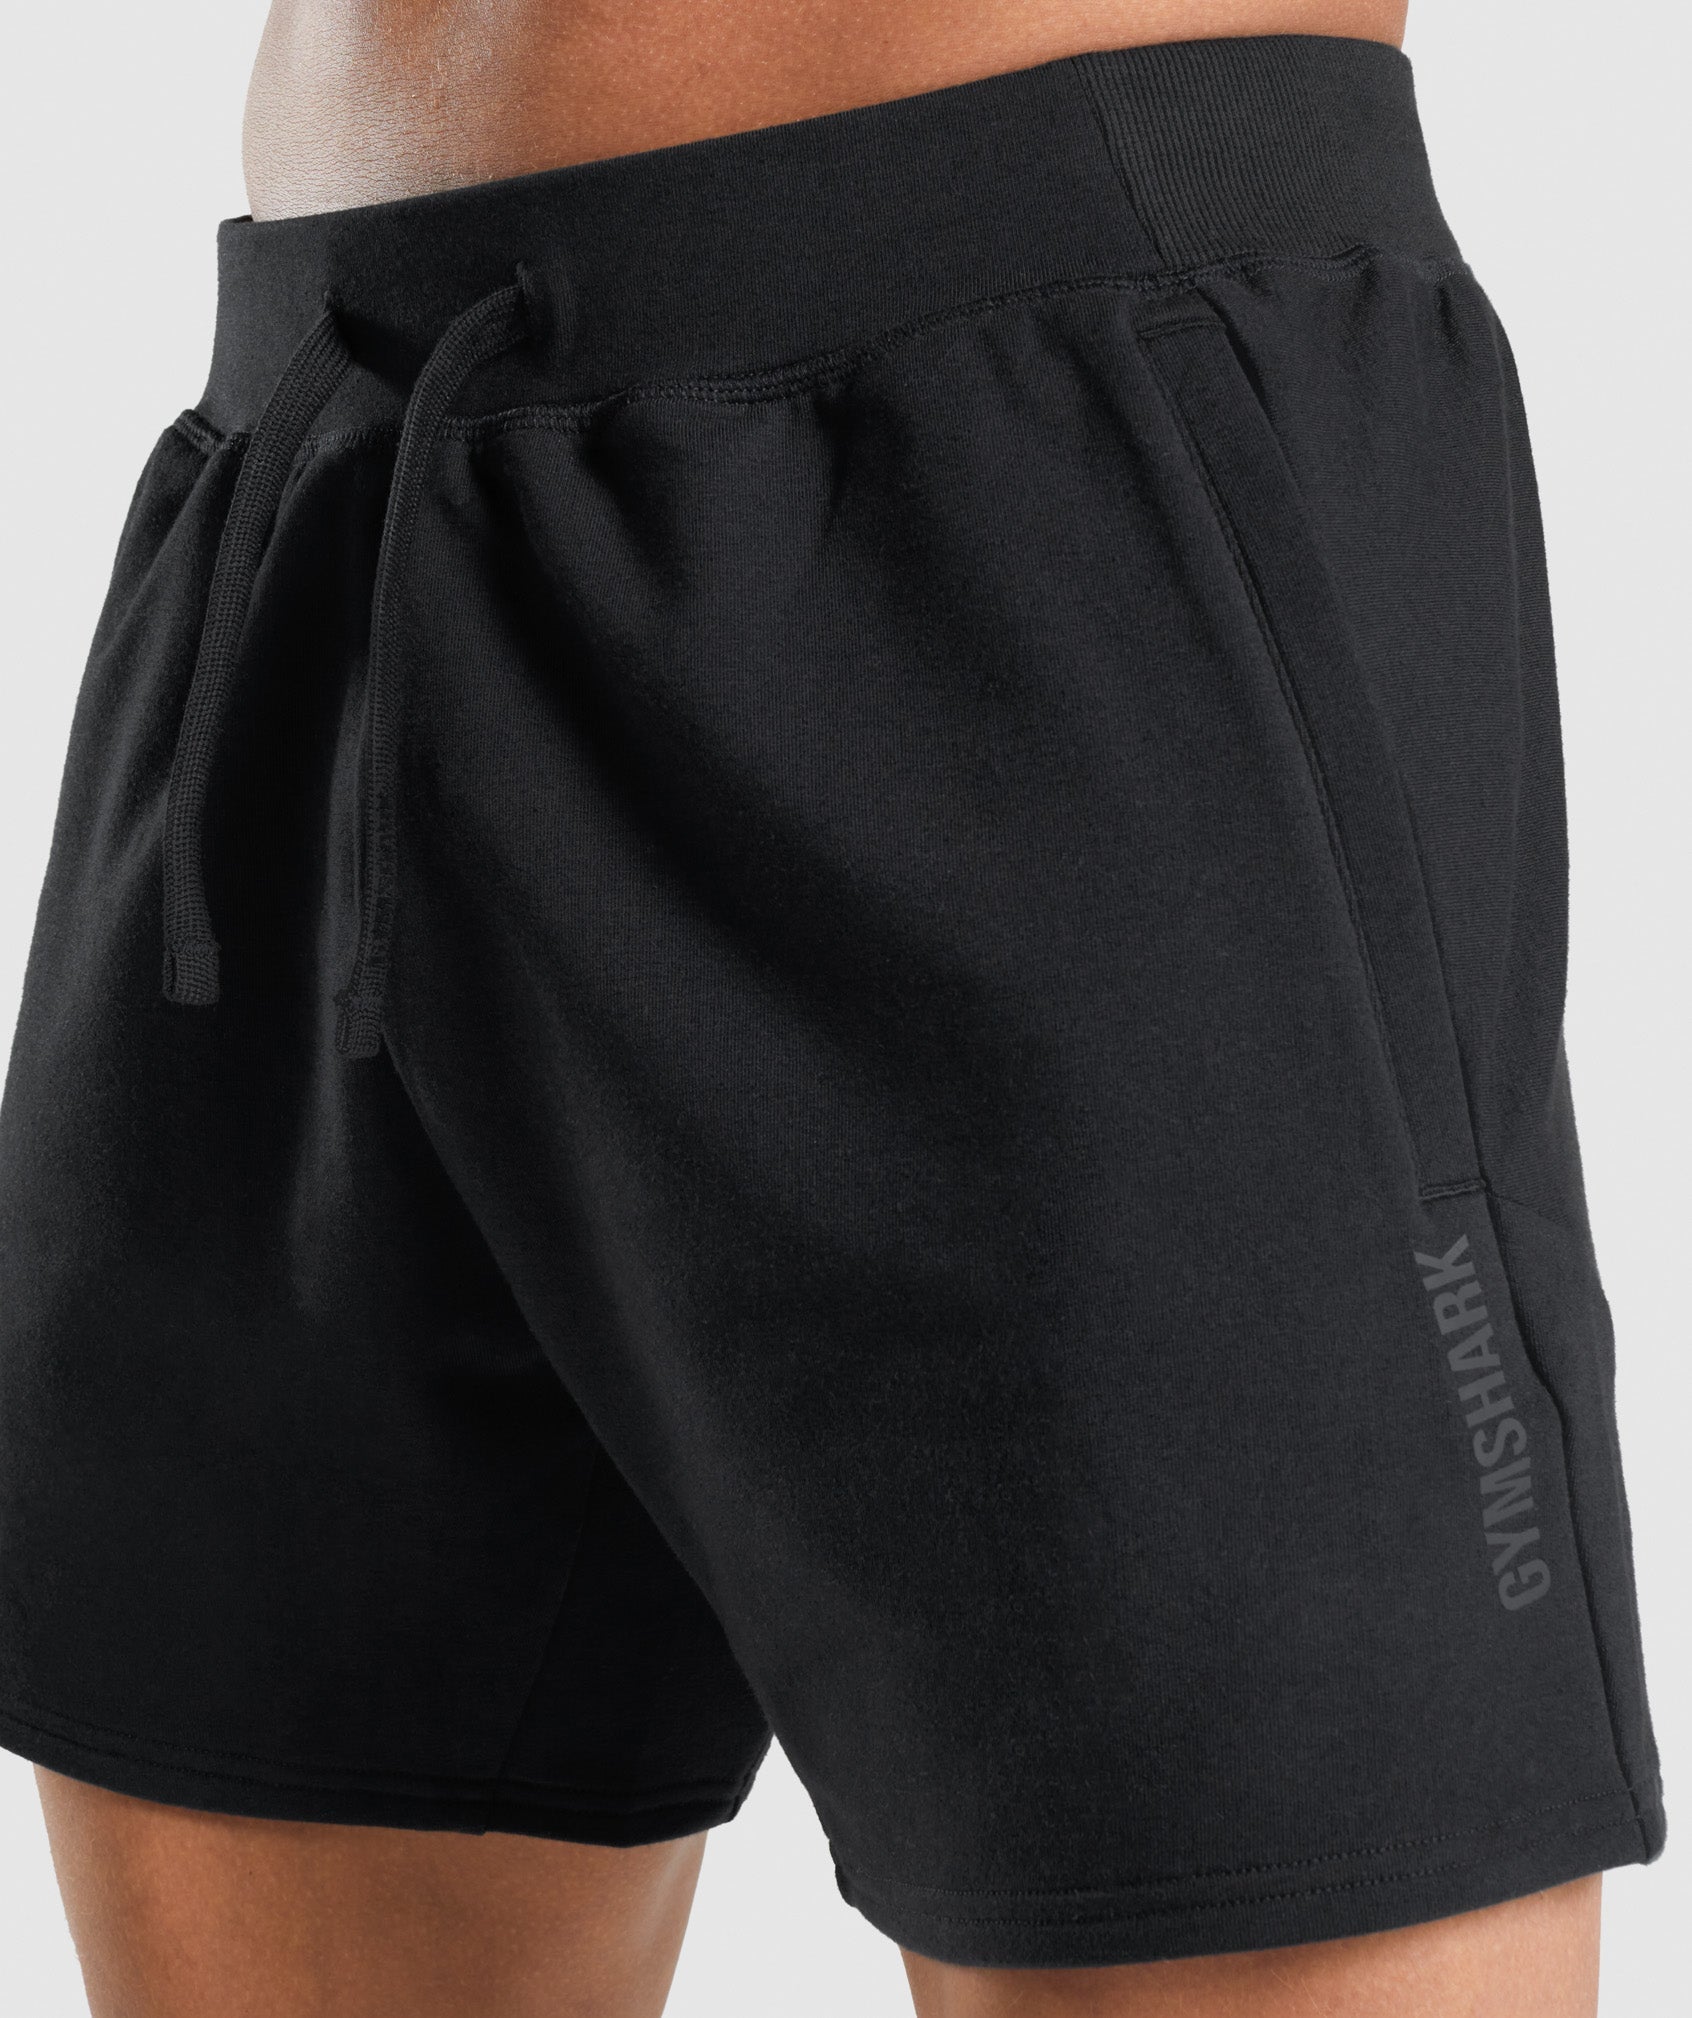 Chalk 5" Quad Shorts in Black - view 7